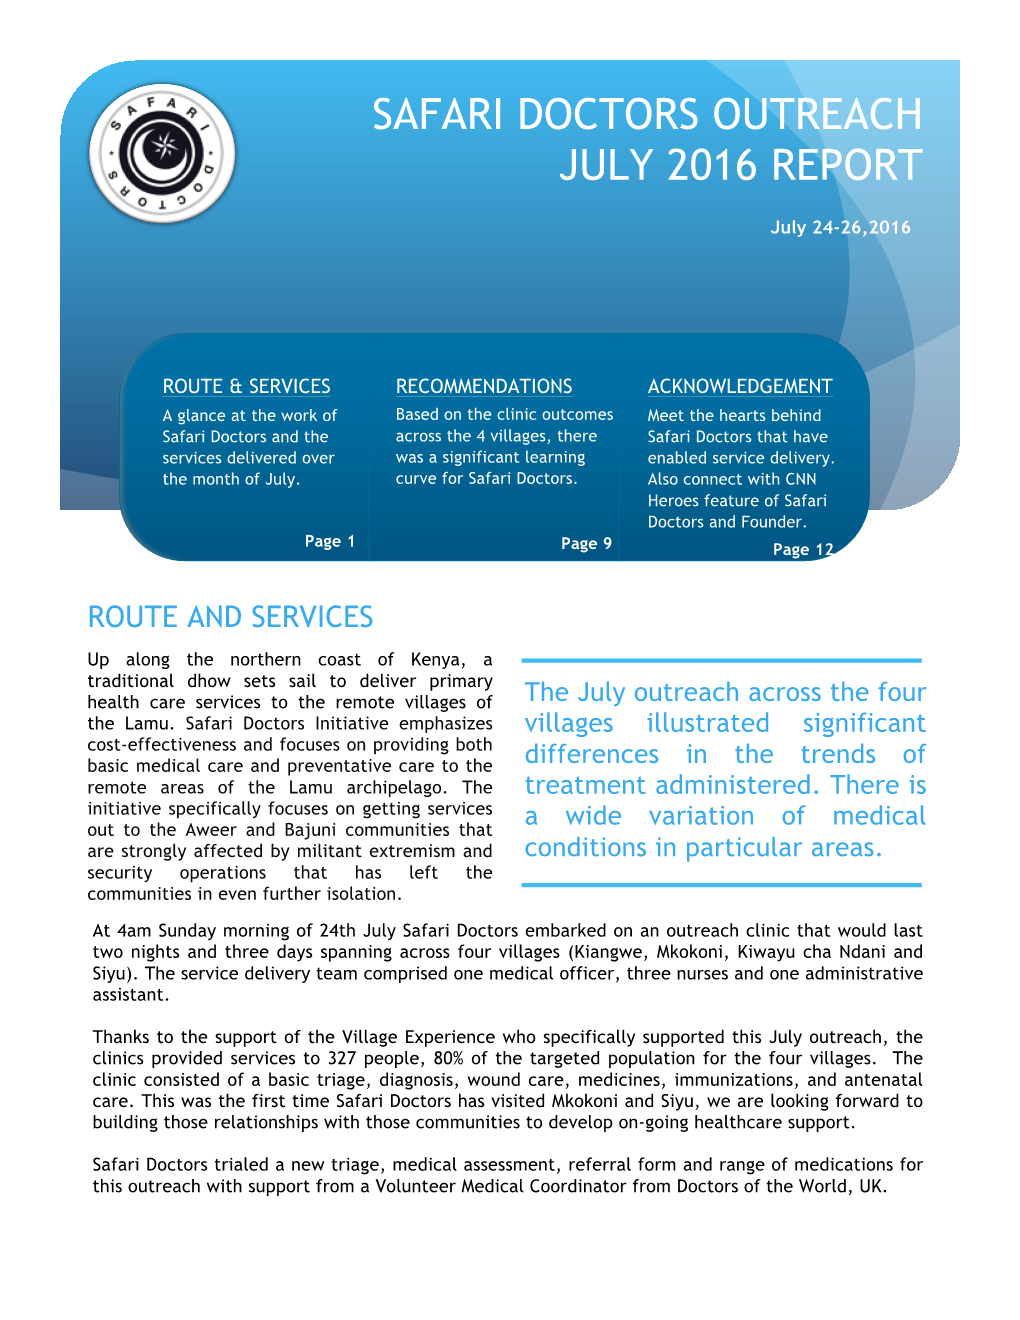 Safari Doctors Outreach July 2016 Report